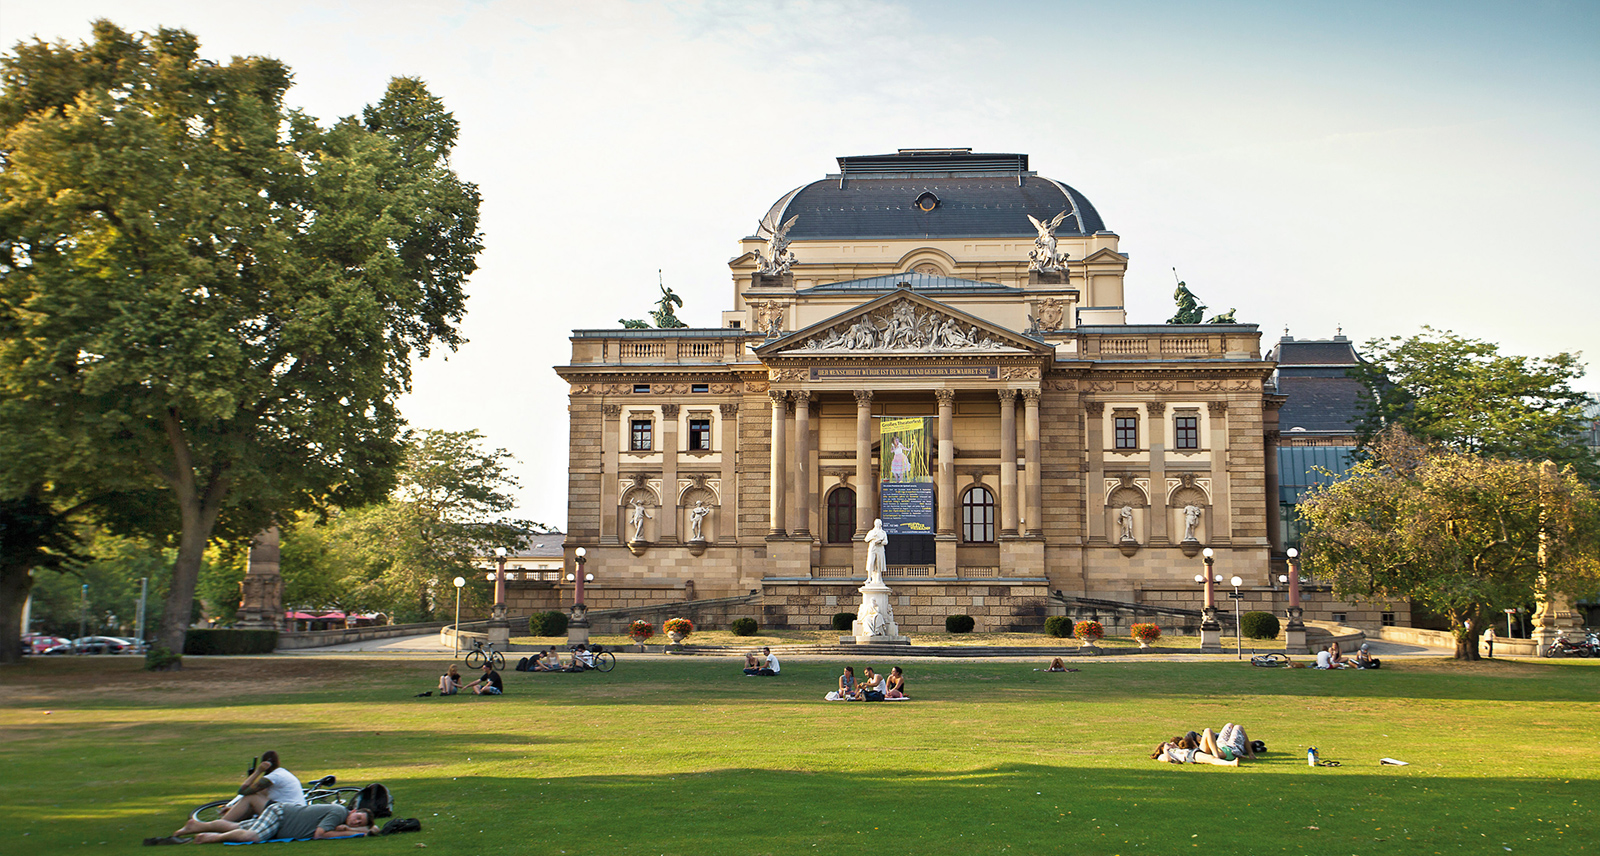 Wiesbaden’s landmark, the Hessian State Theatre